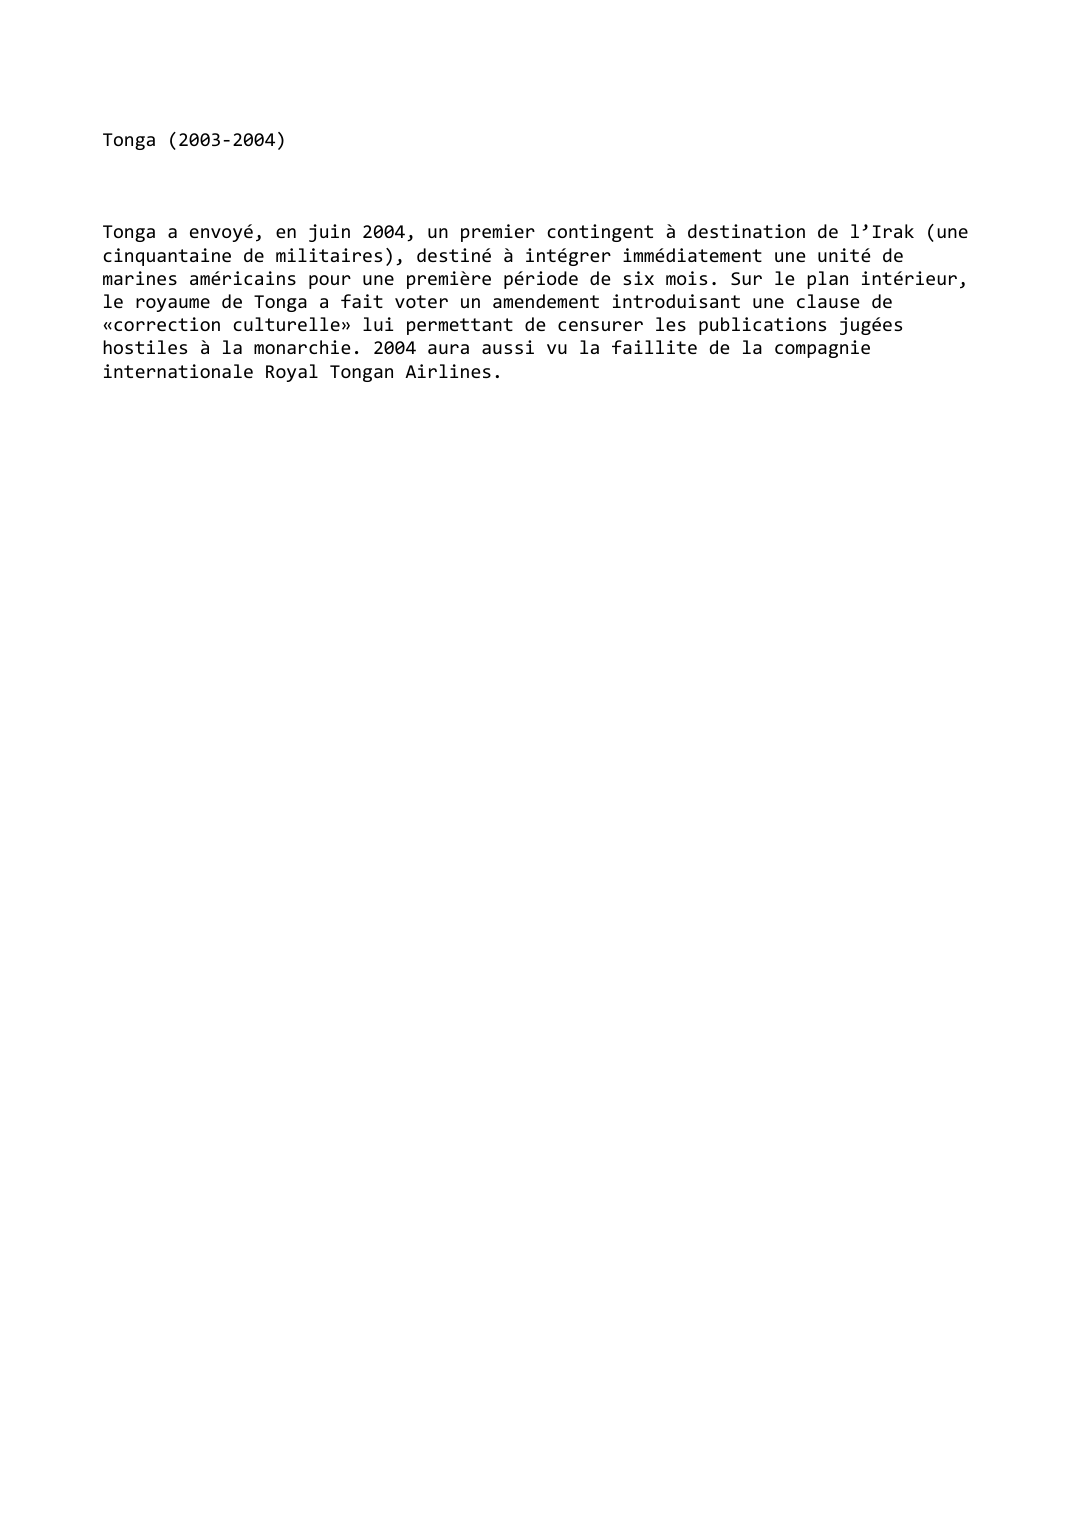 Prévisualisation du document Tonga (2003-2004)